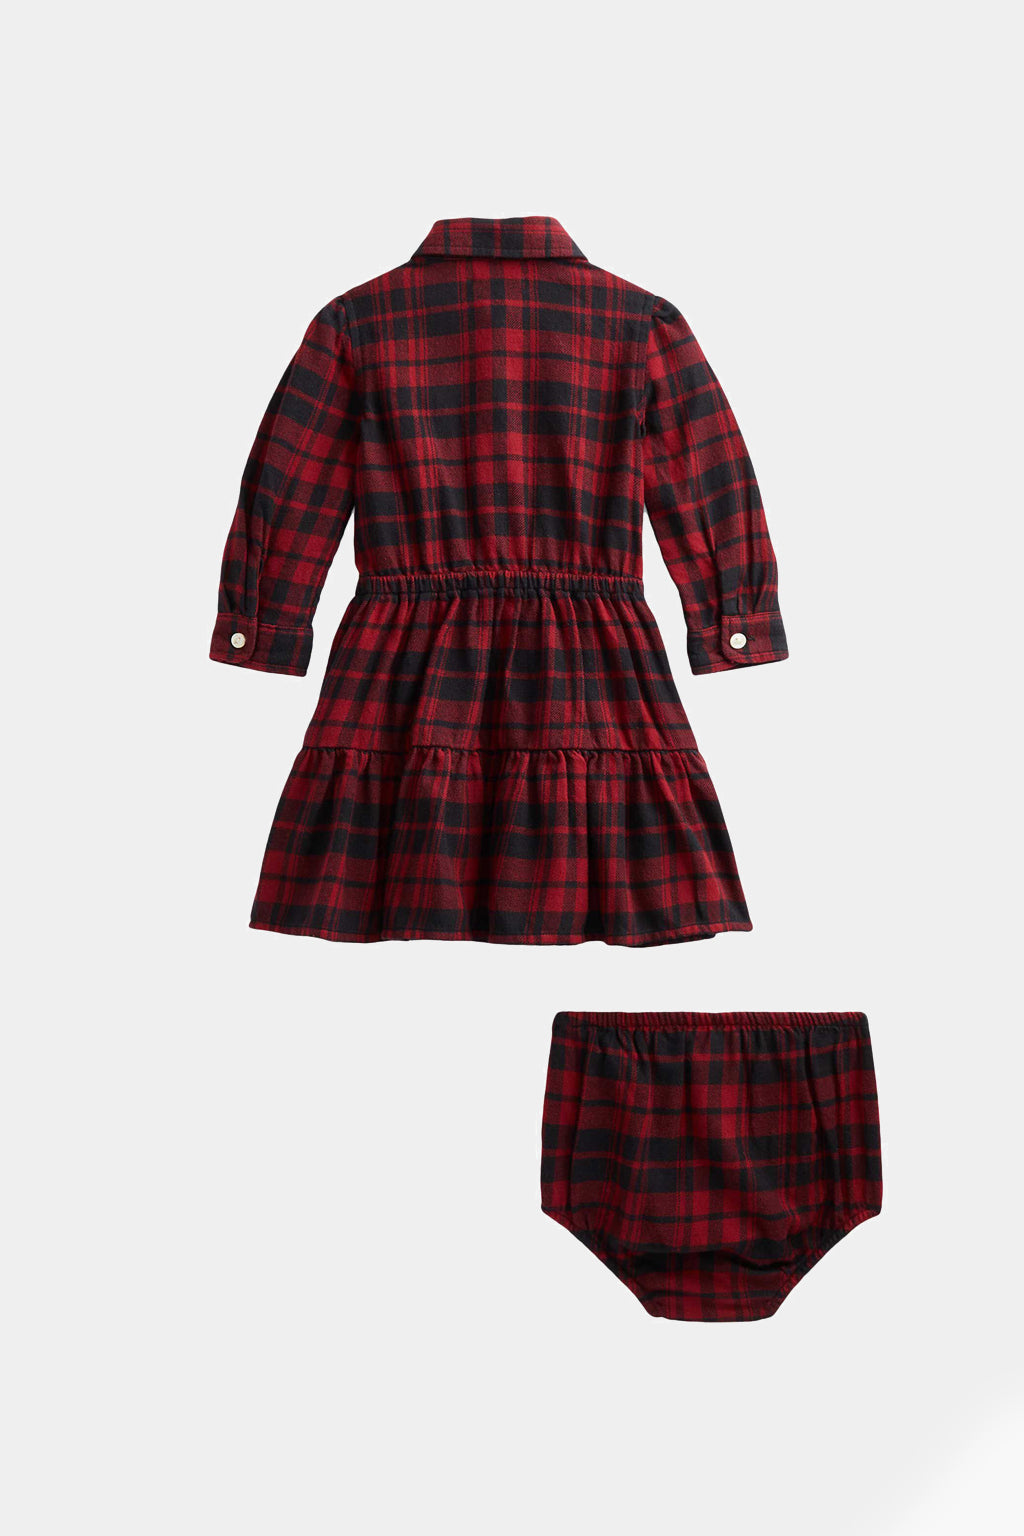 Polo Ralph Lauren - Girl's Plaid Cotton Twill Shirtdress - Little Kid In Black/Red